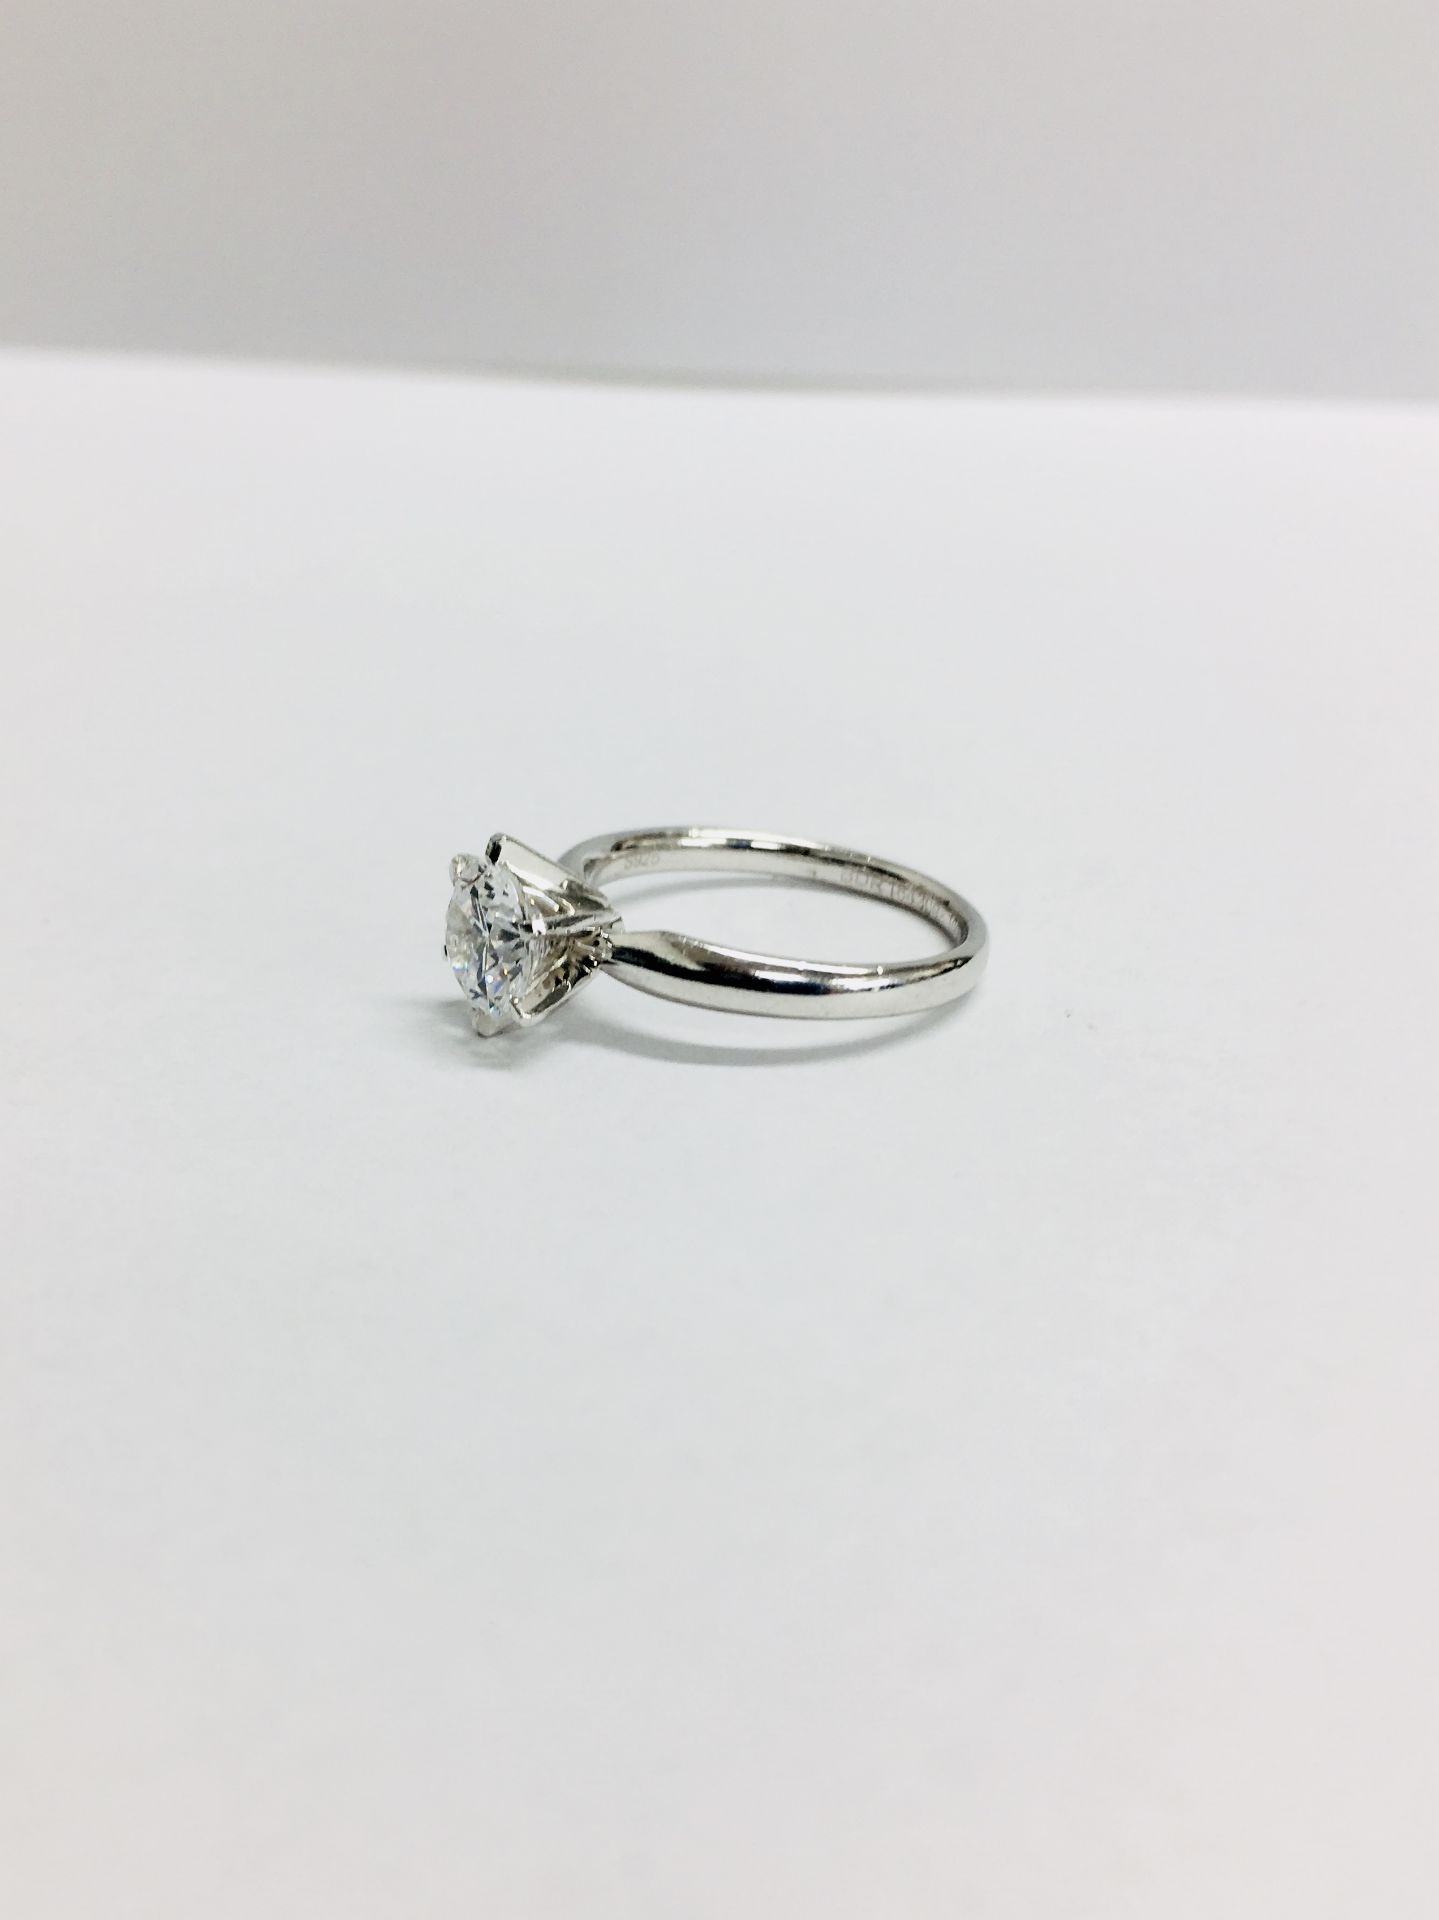 Platinum diamond solitaire ring,0.50ct F colour vvs1 clarity diamond brilliant cut natural, - Image 2 of 6